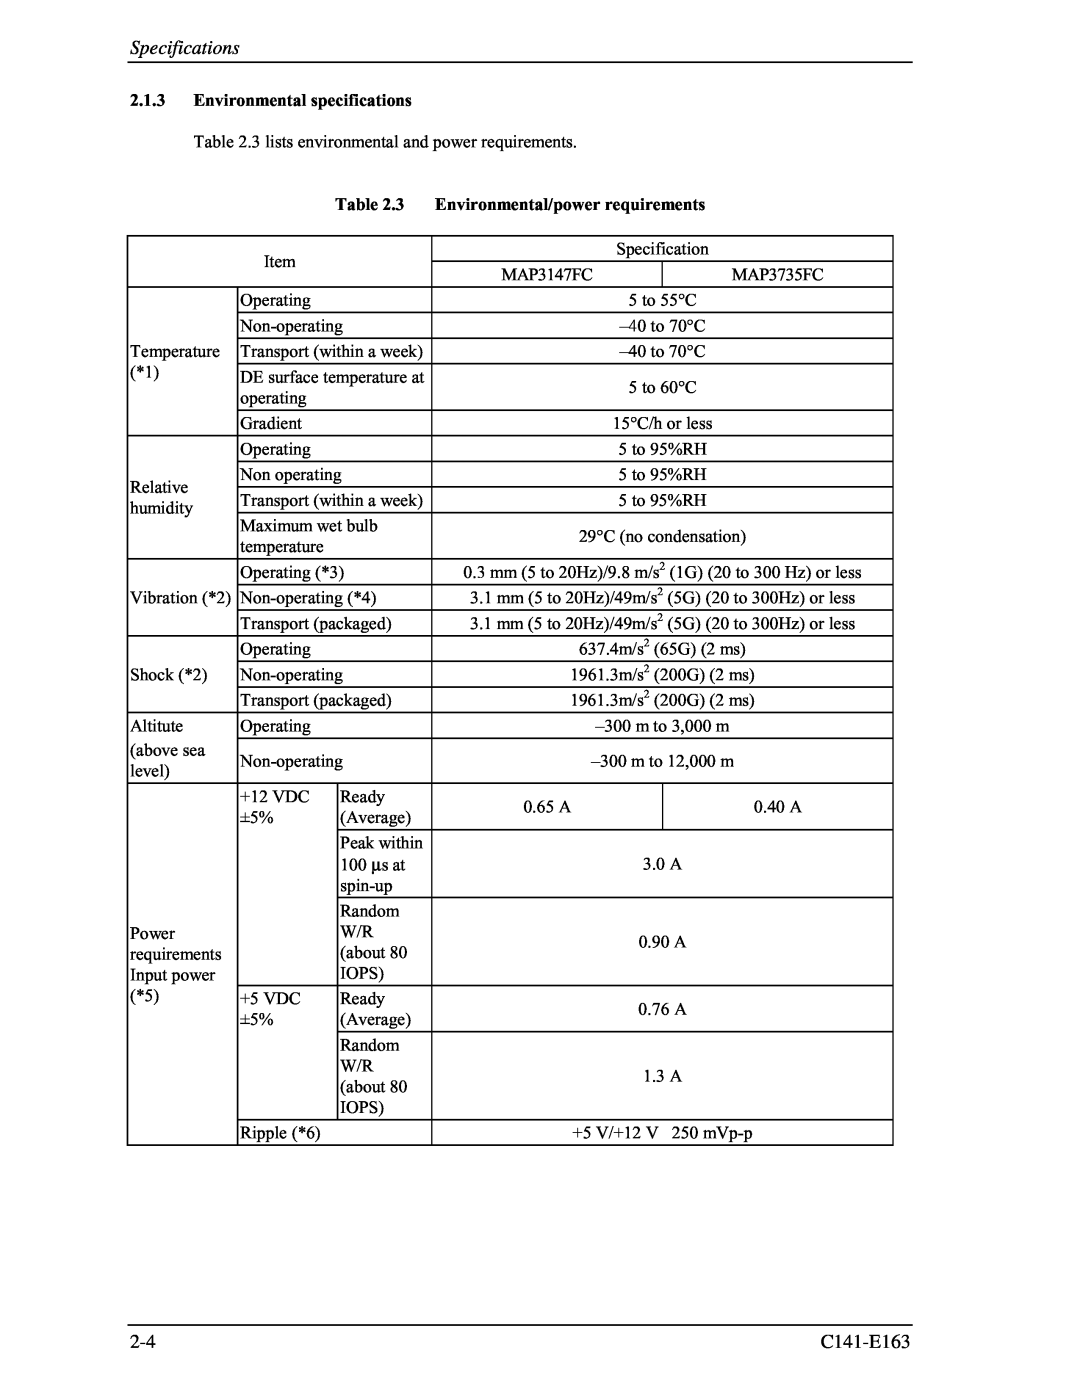 Fujitsu MAP3147FC, MAP3735FC Specifications, C141-E163, Environmental specifications, Environmental/power requirements 